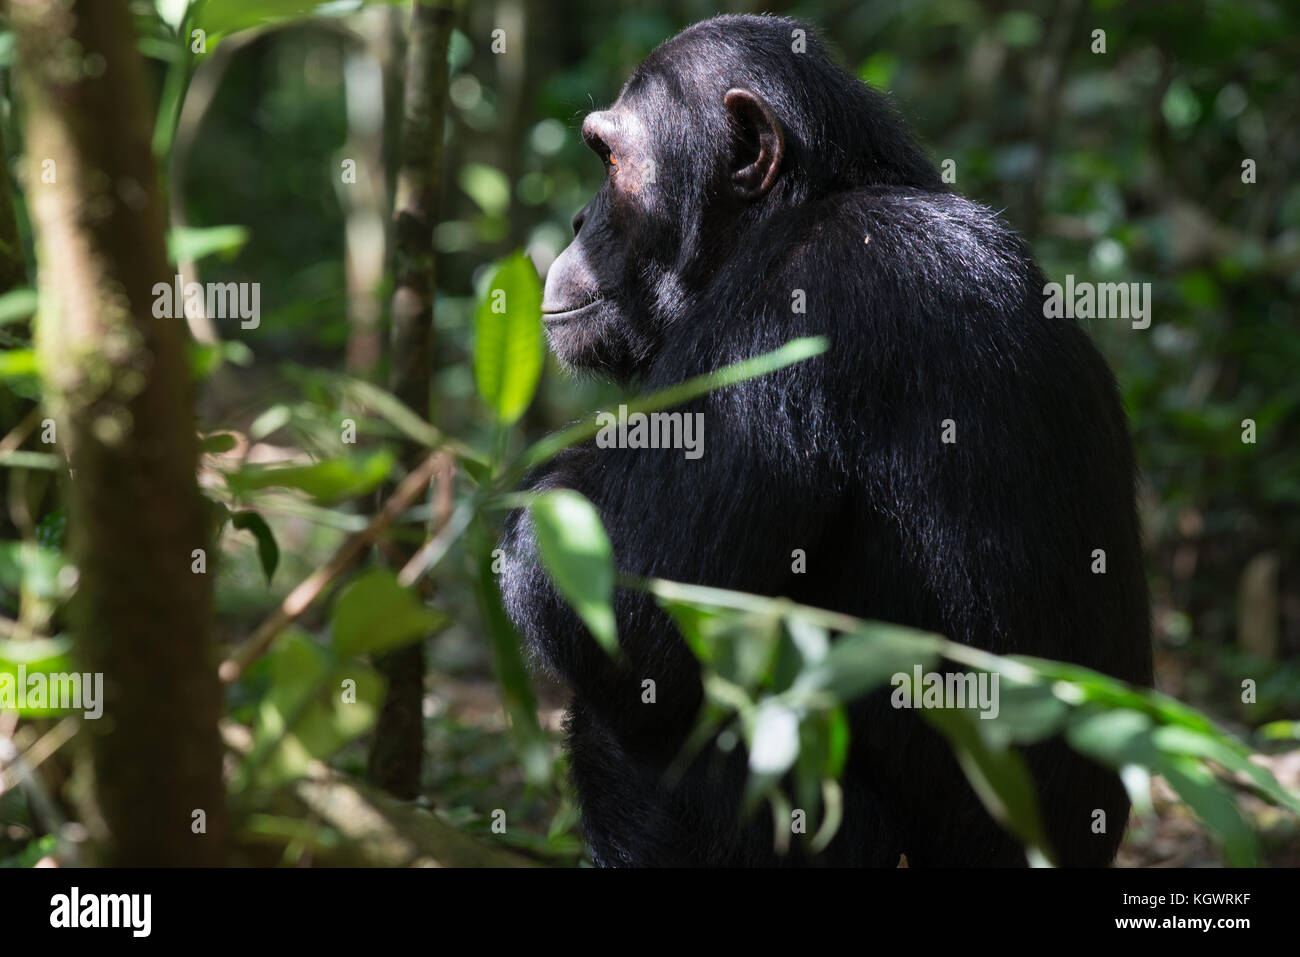 Adult chimpanzee in Kibale Forest, Uganda. Stock Photo